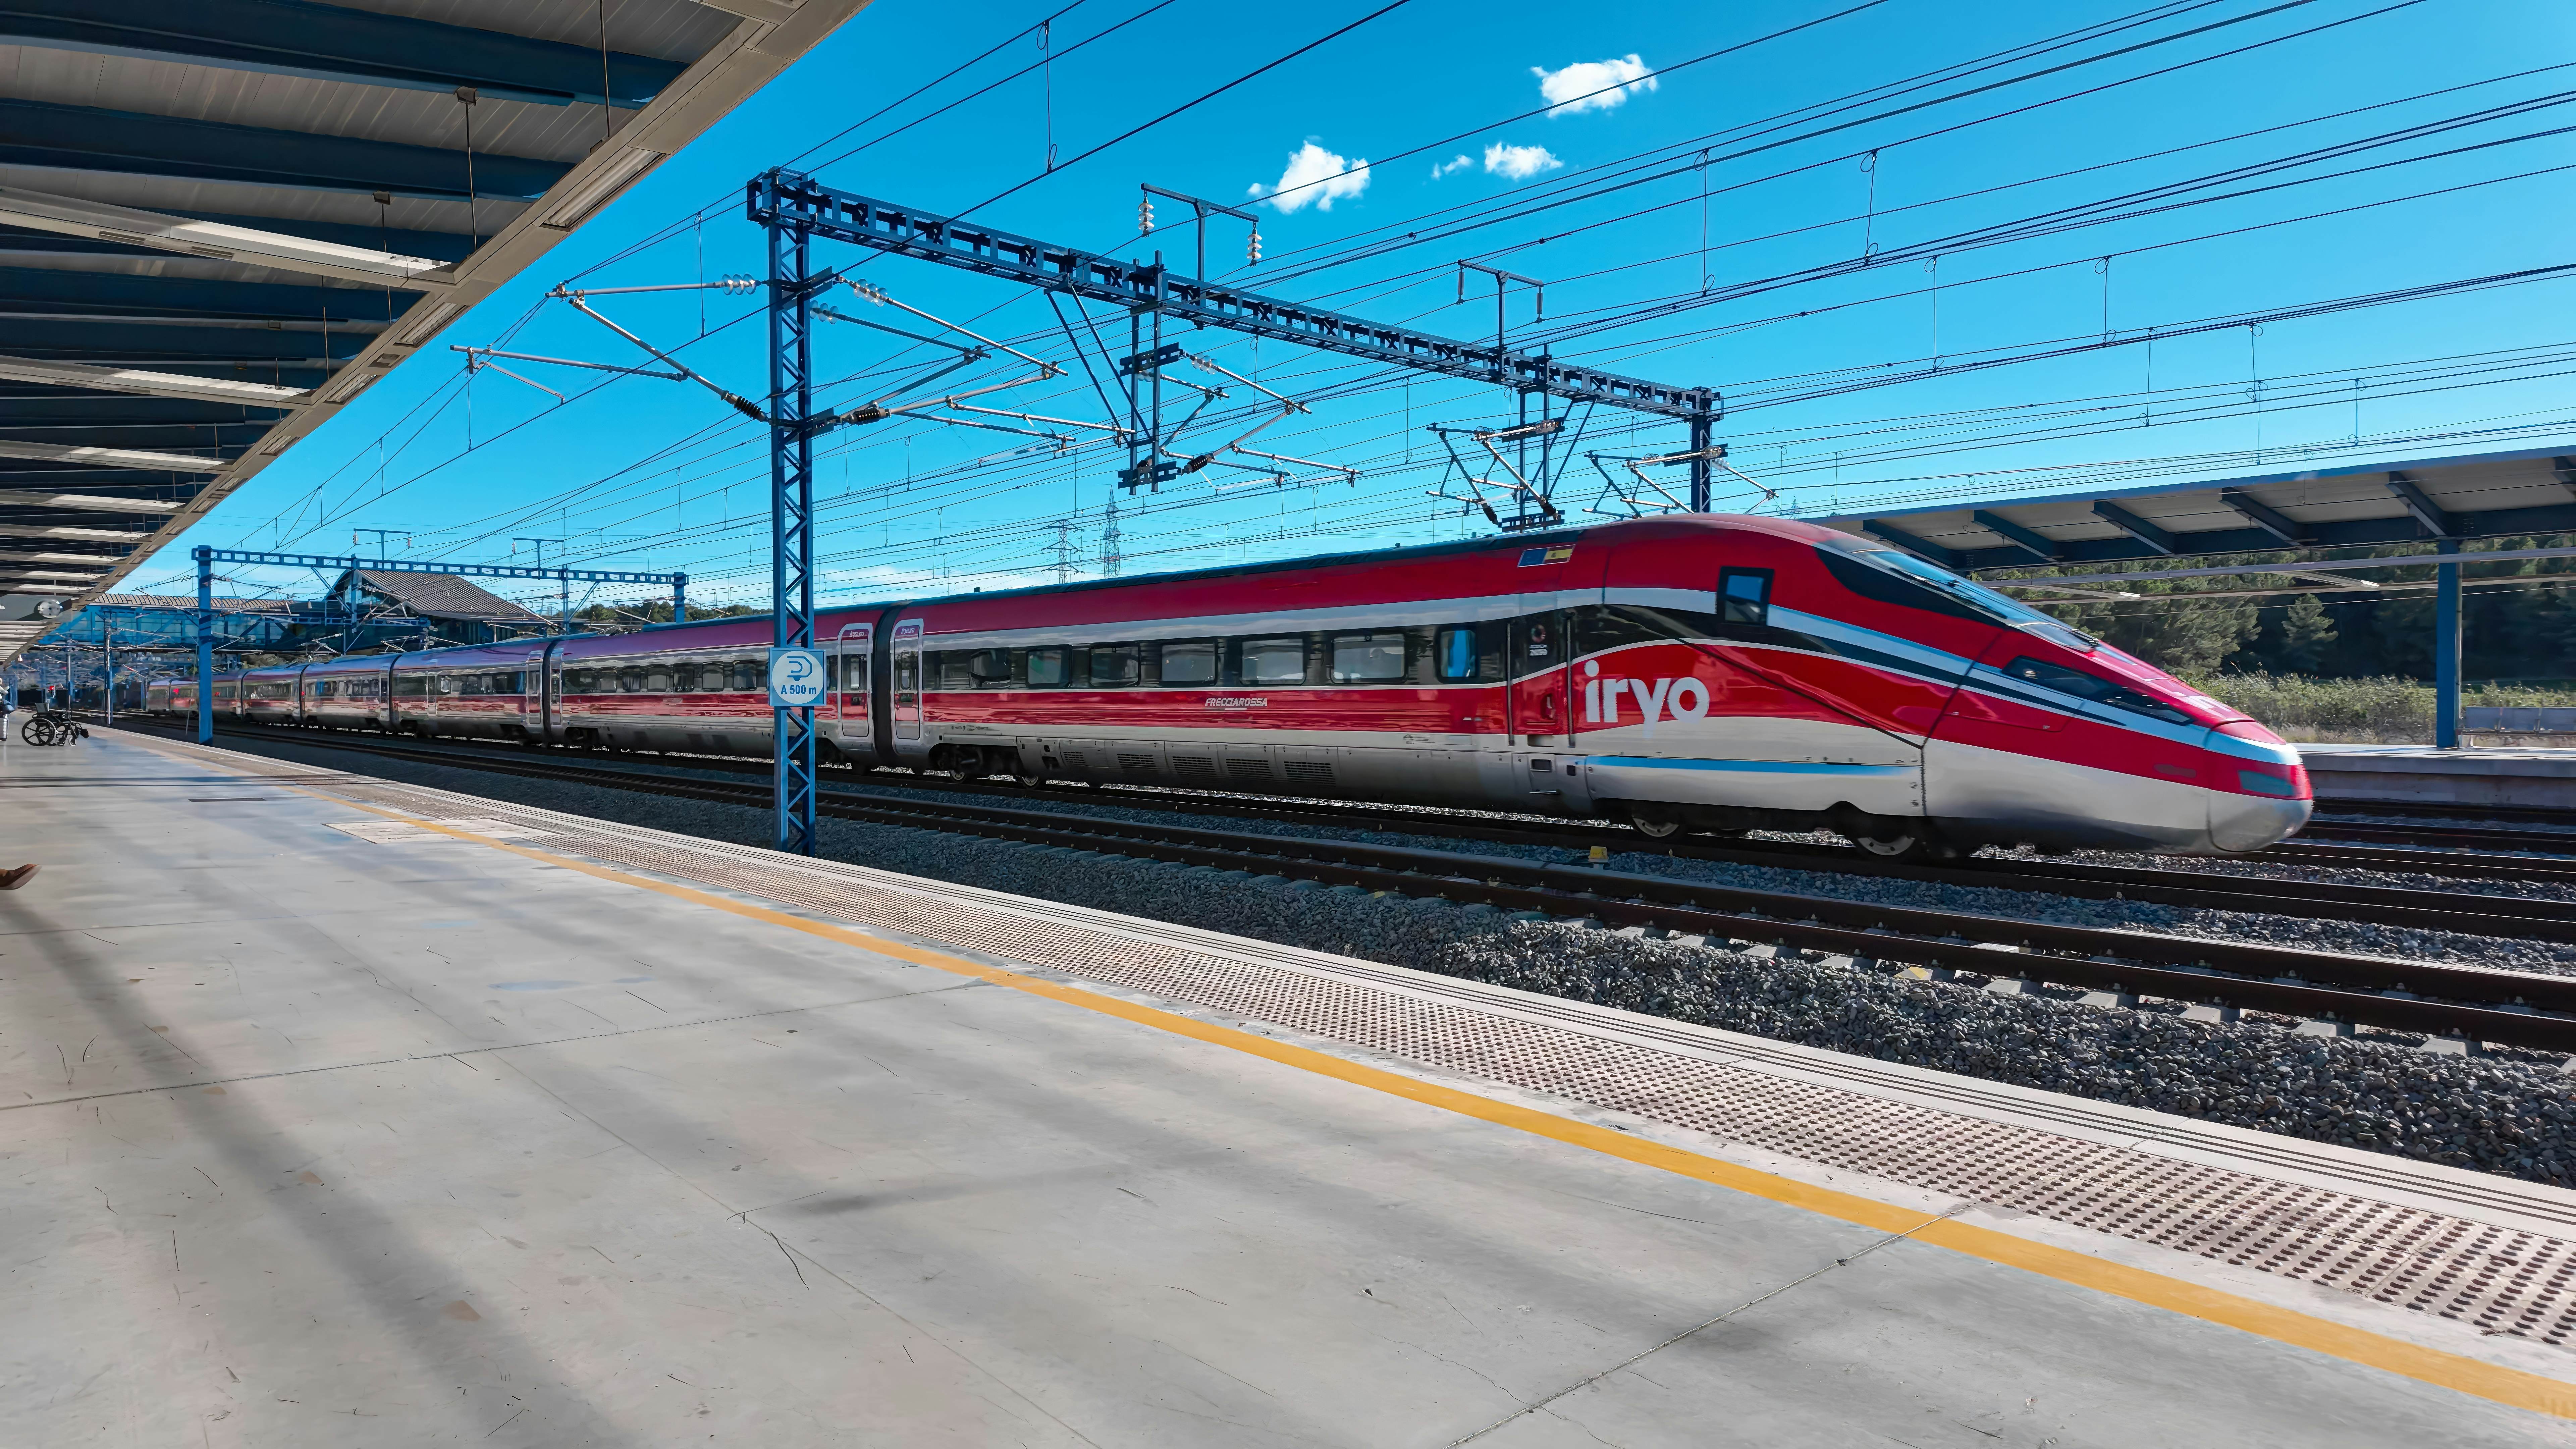 A red train speeds through a station